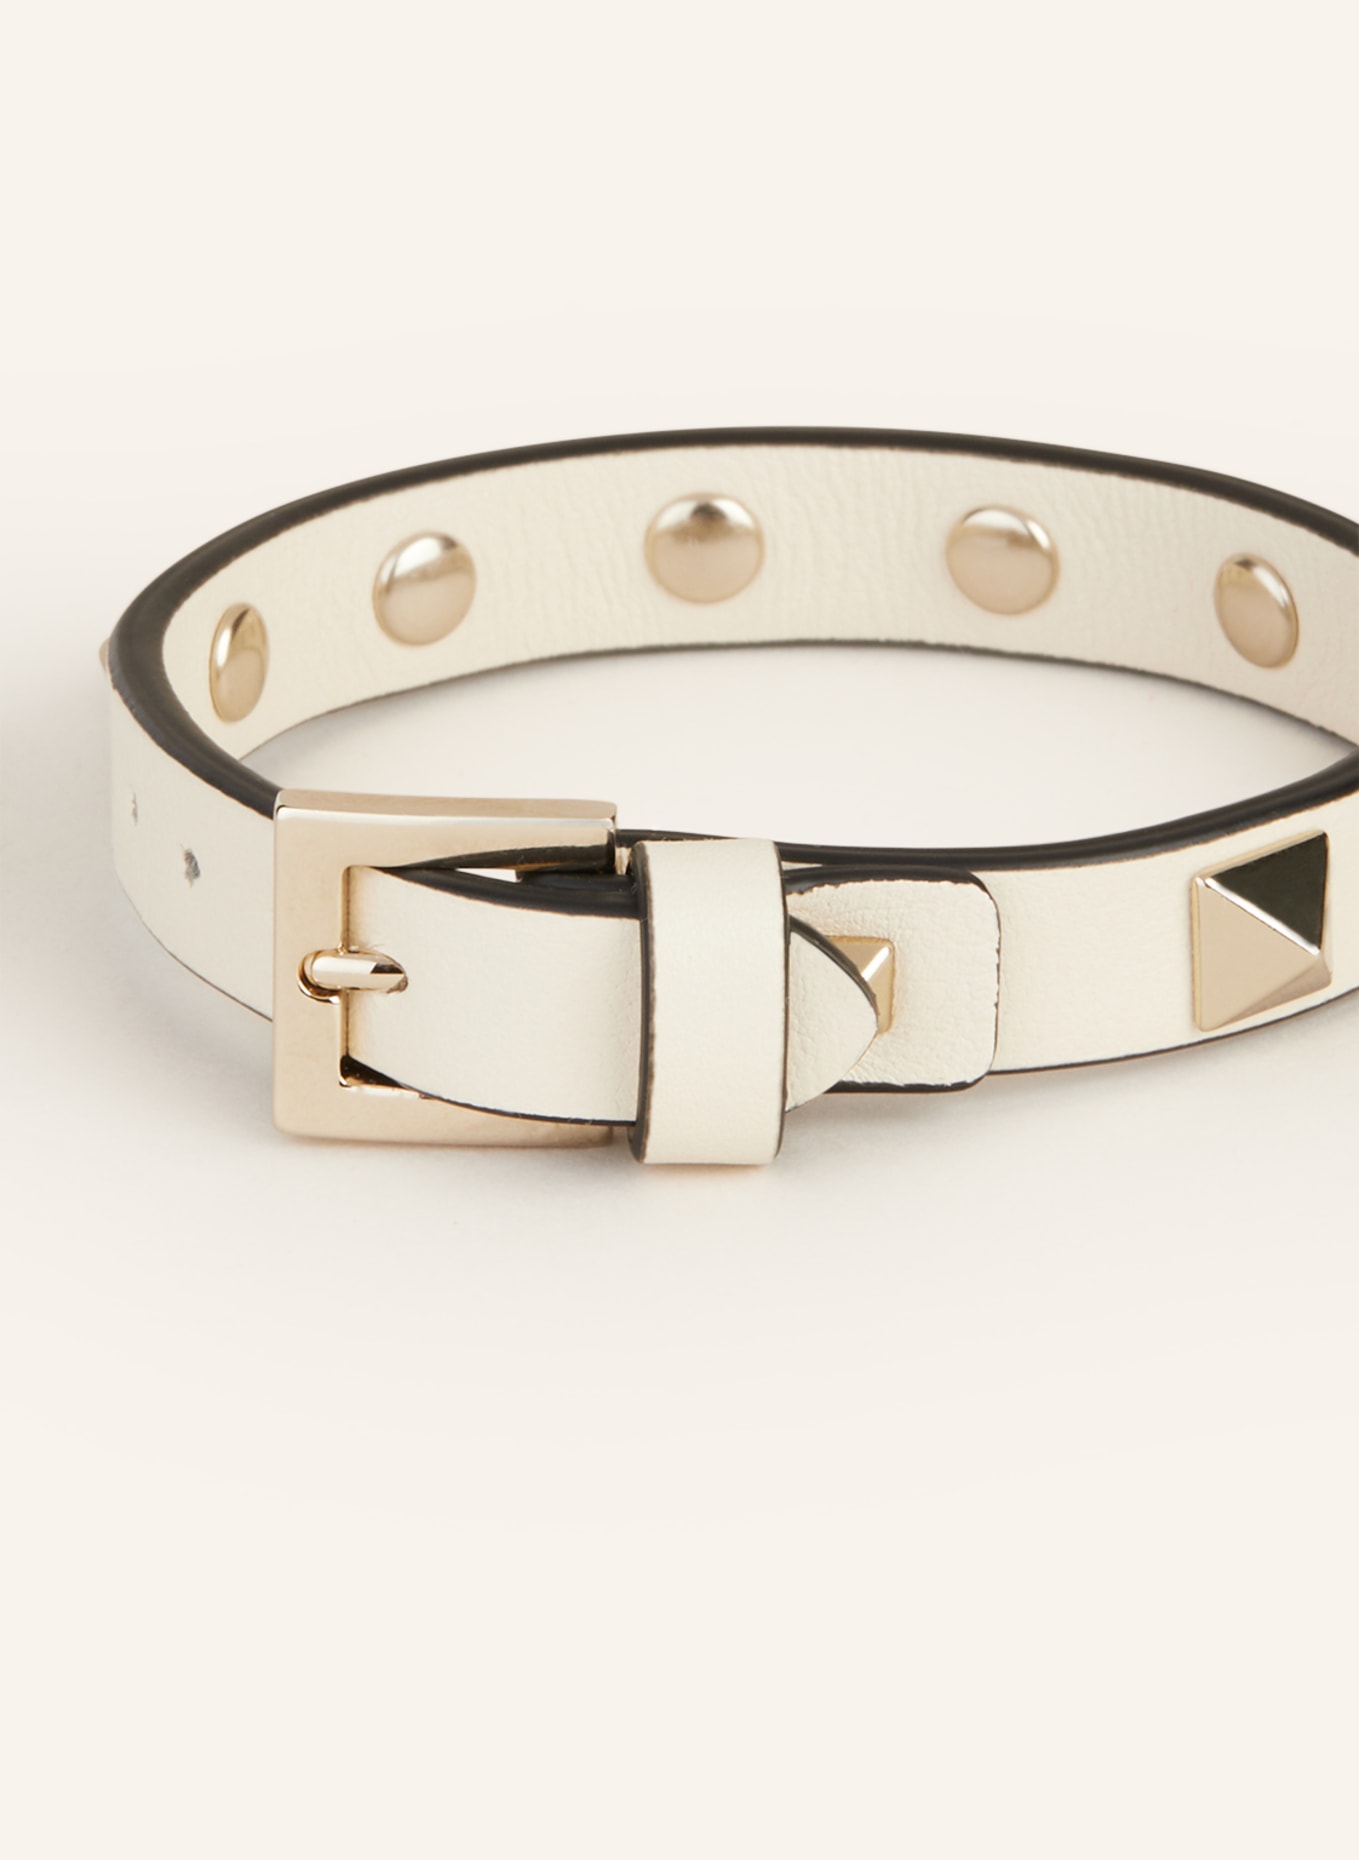 grad mesterværk Bering strædet VALENTINO GARAVANI Leather bracelet ROCKSTUD in white